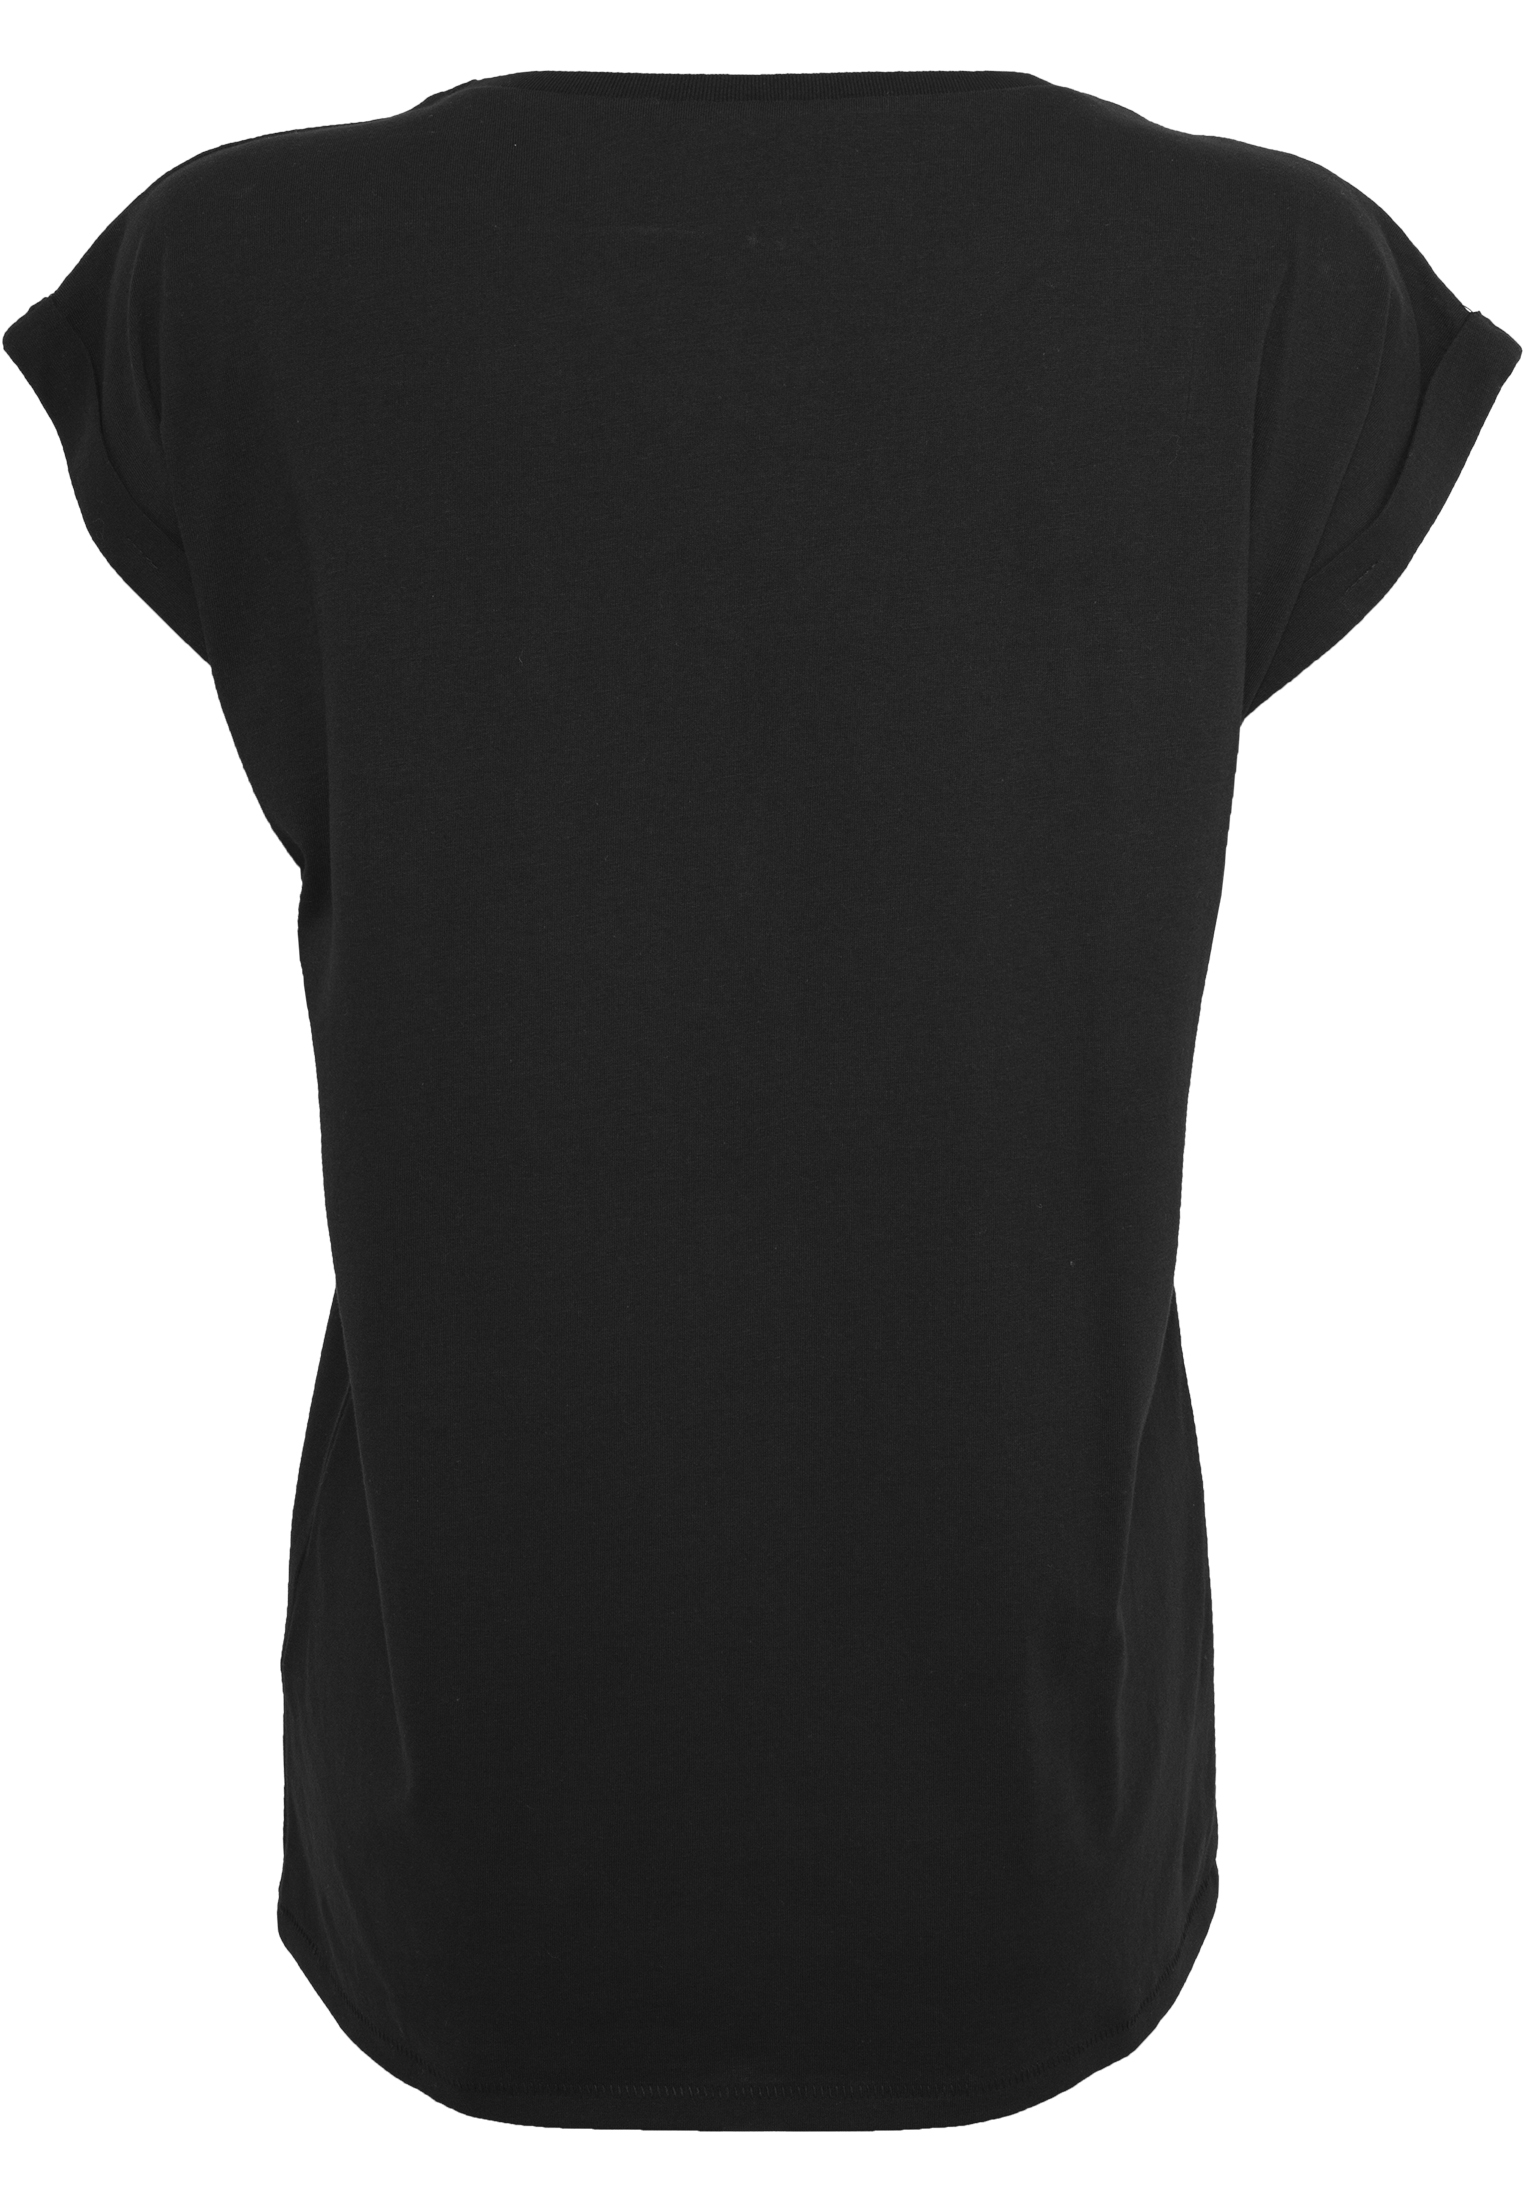 T-Shirts Ladies Rita Ora Topless Tee in Farbe black